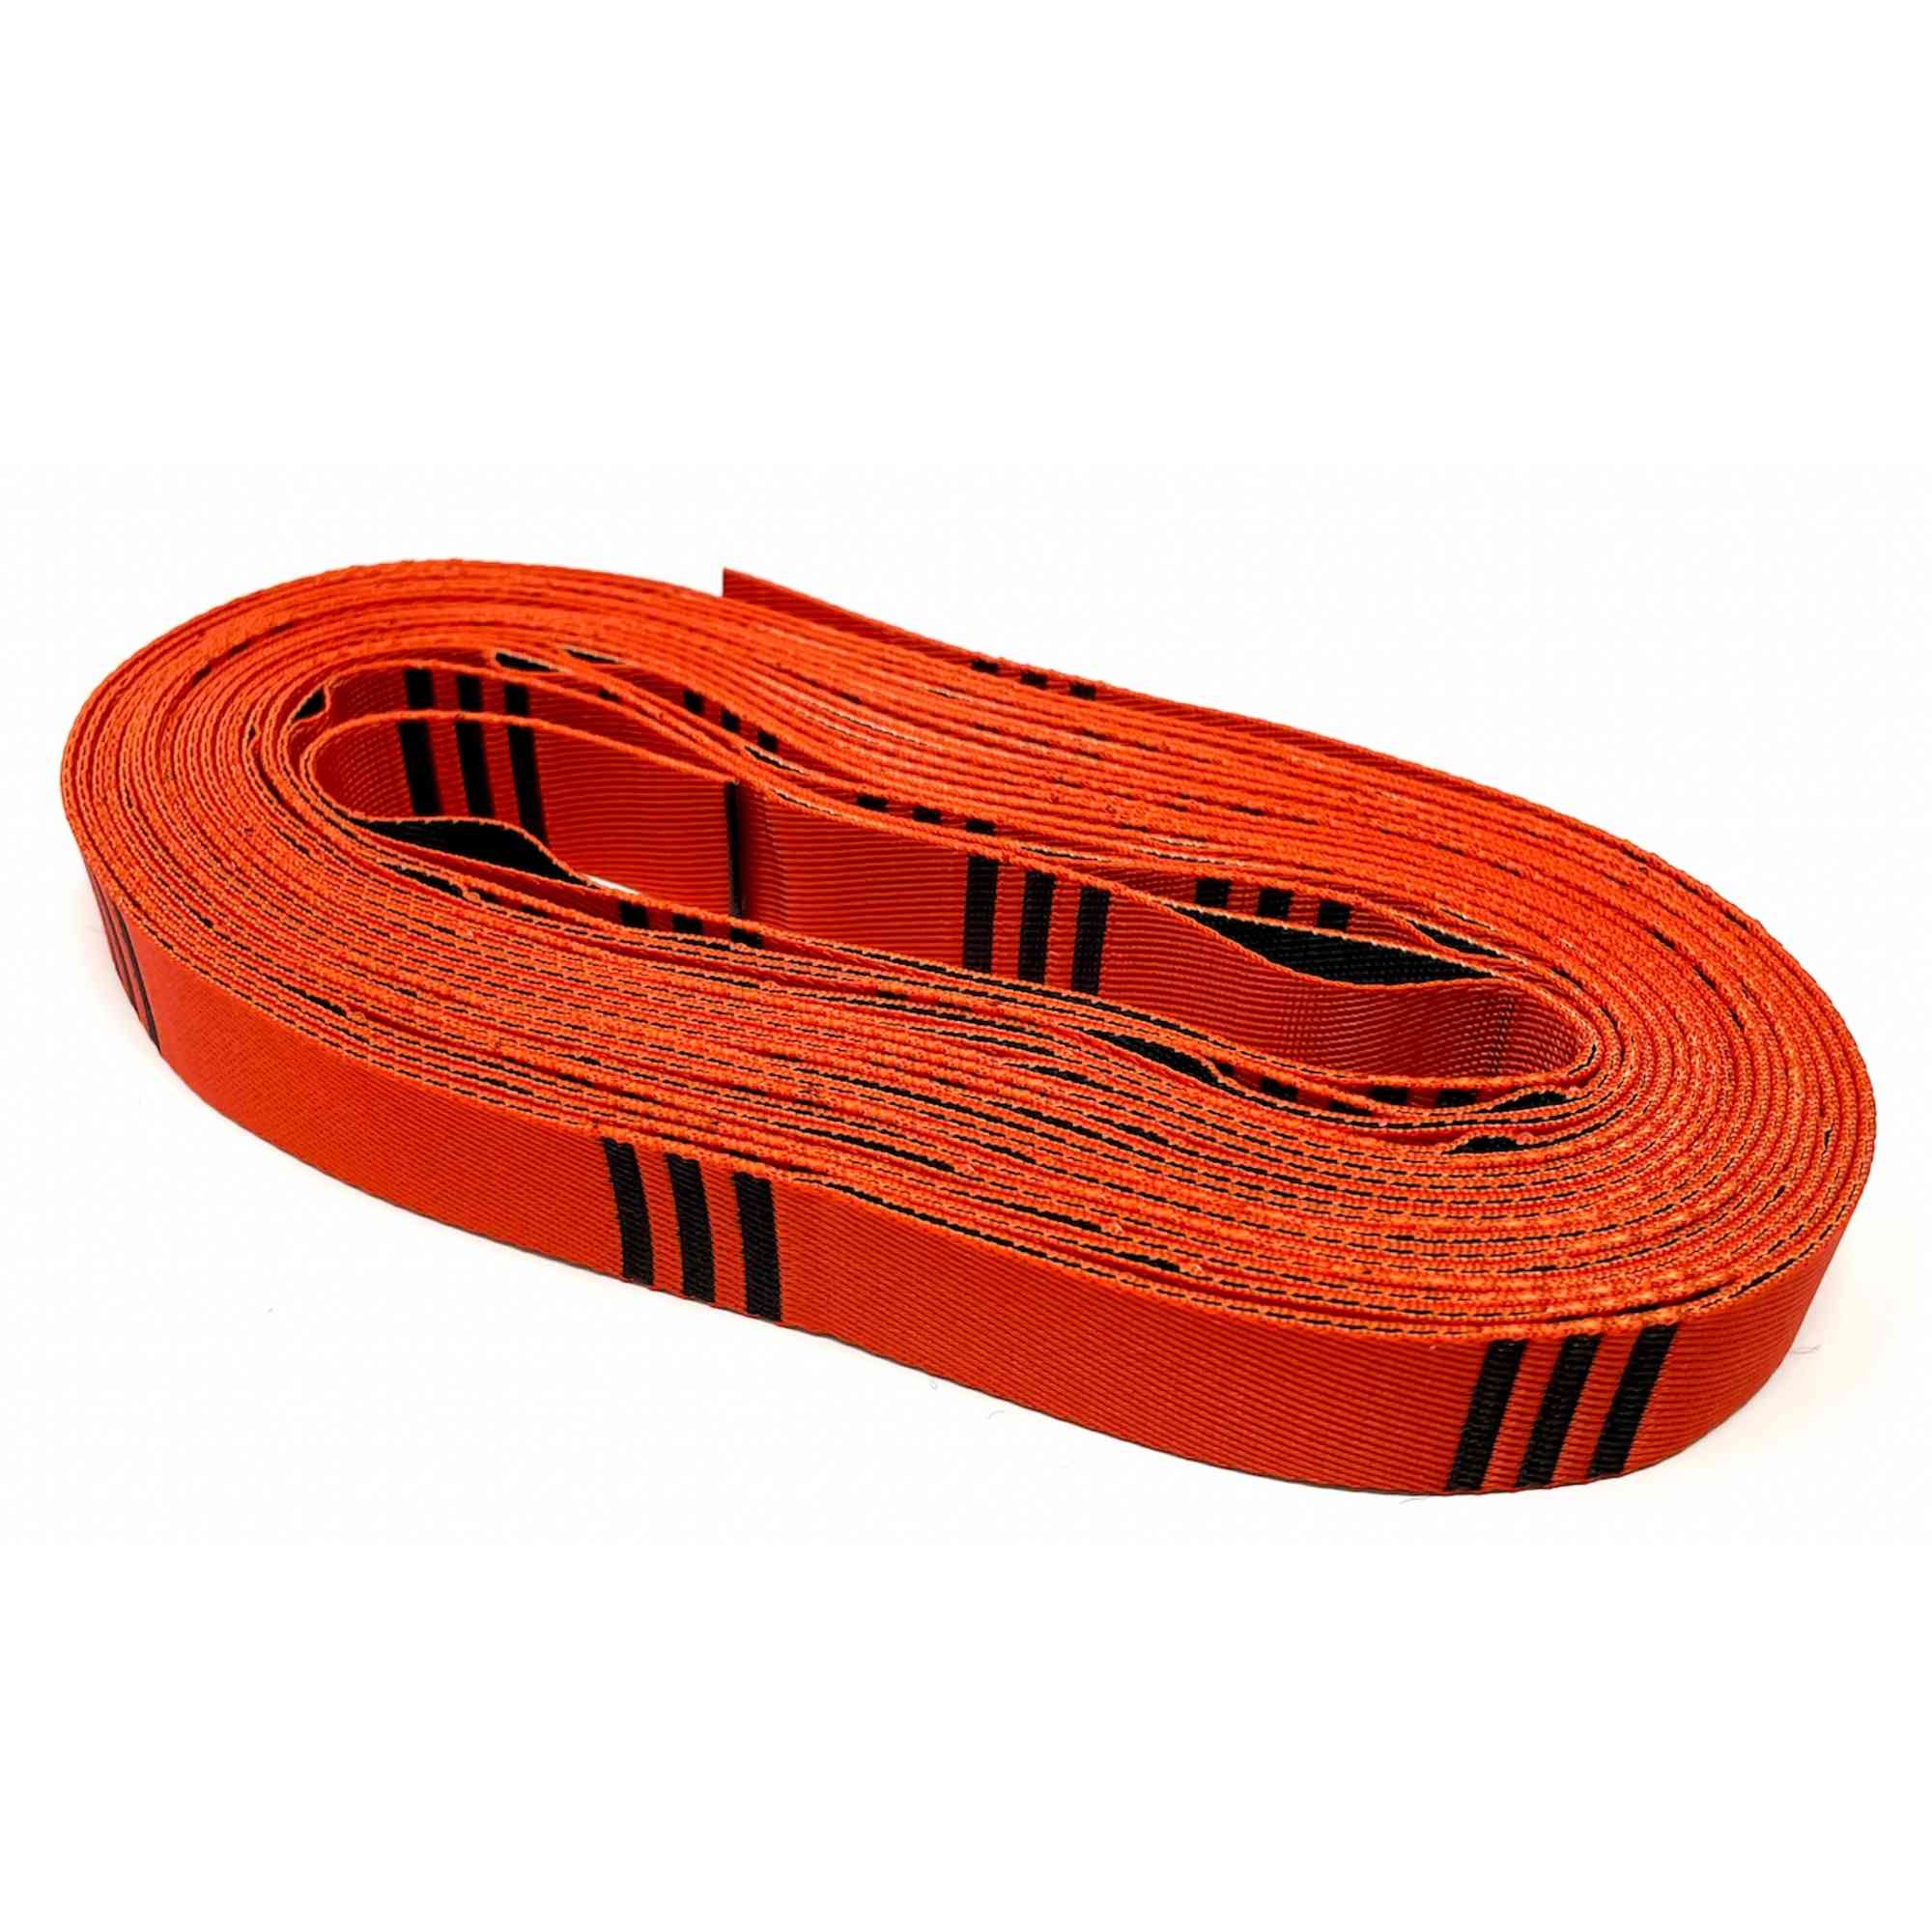 g belt in burnt orange